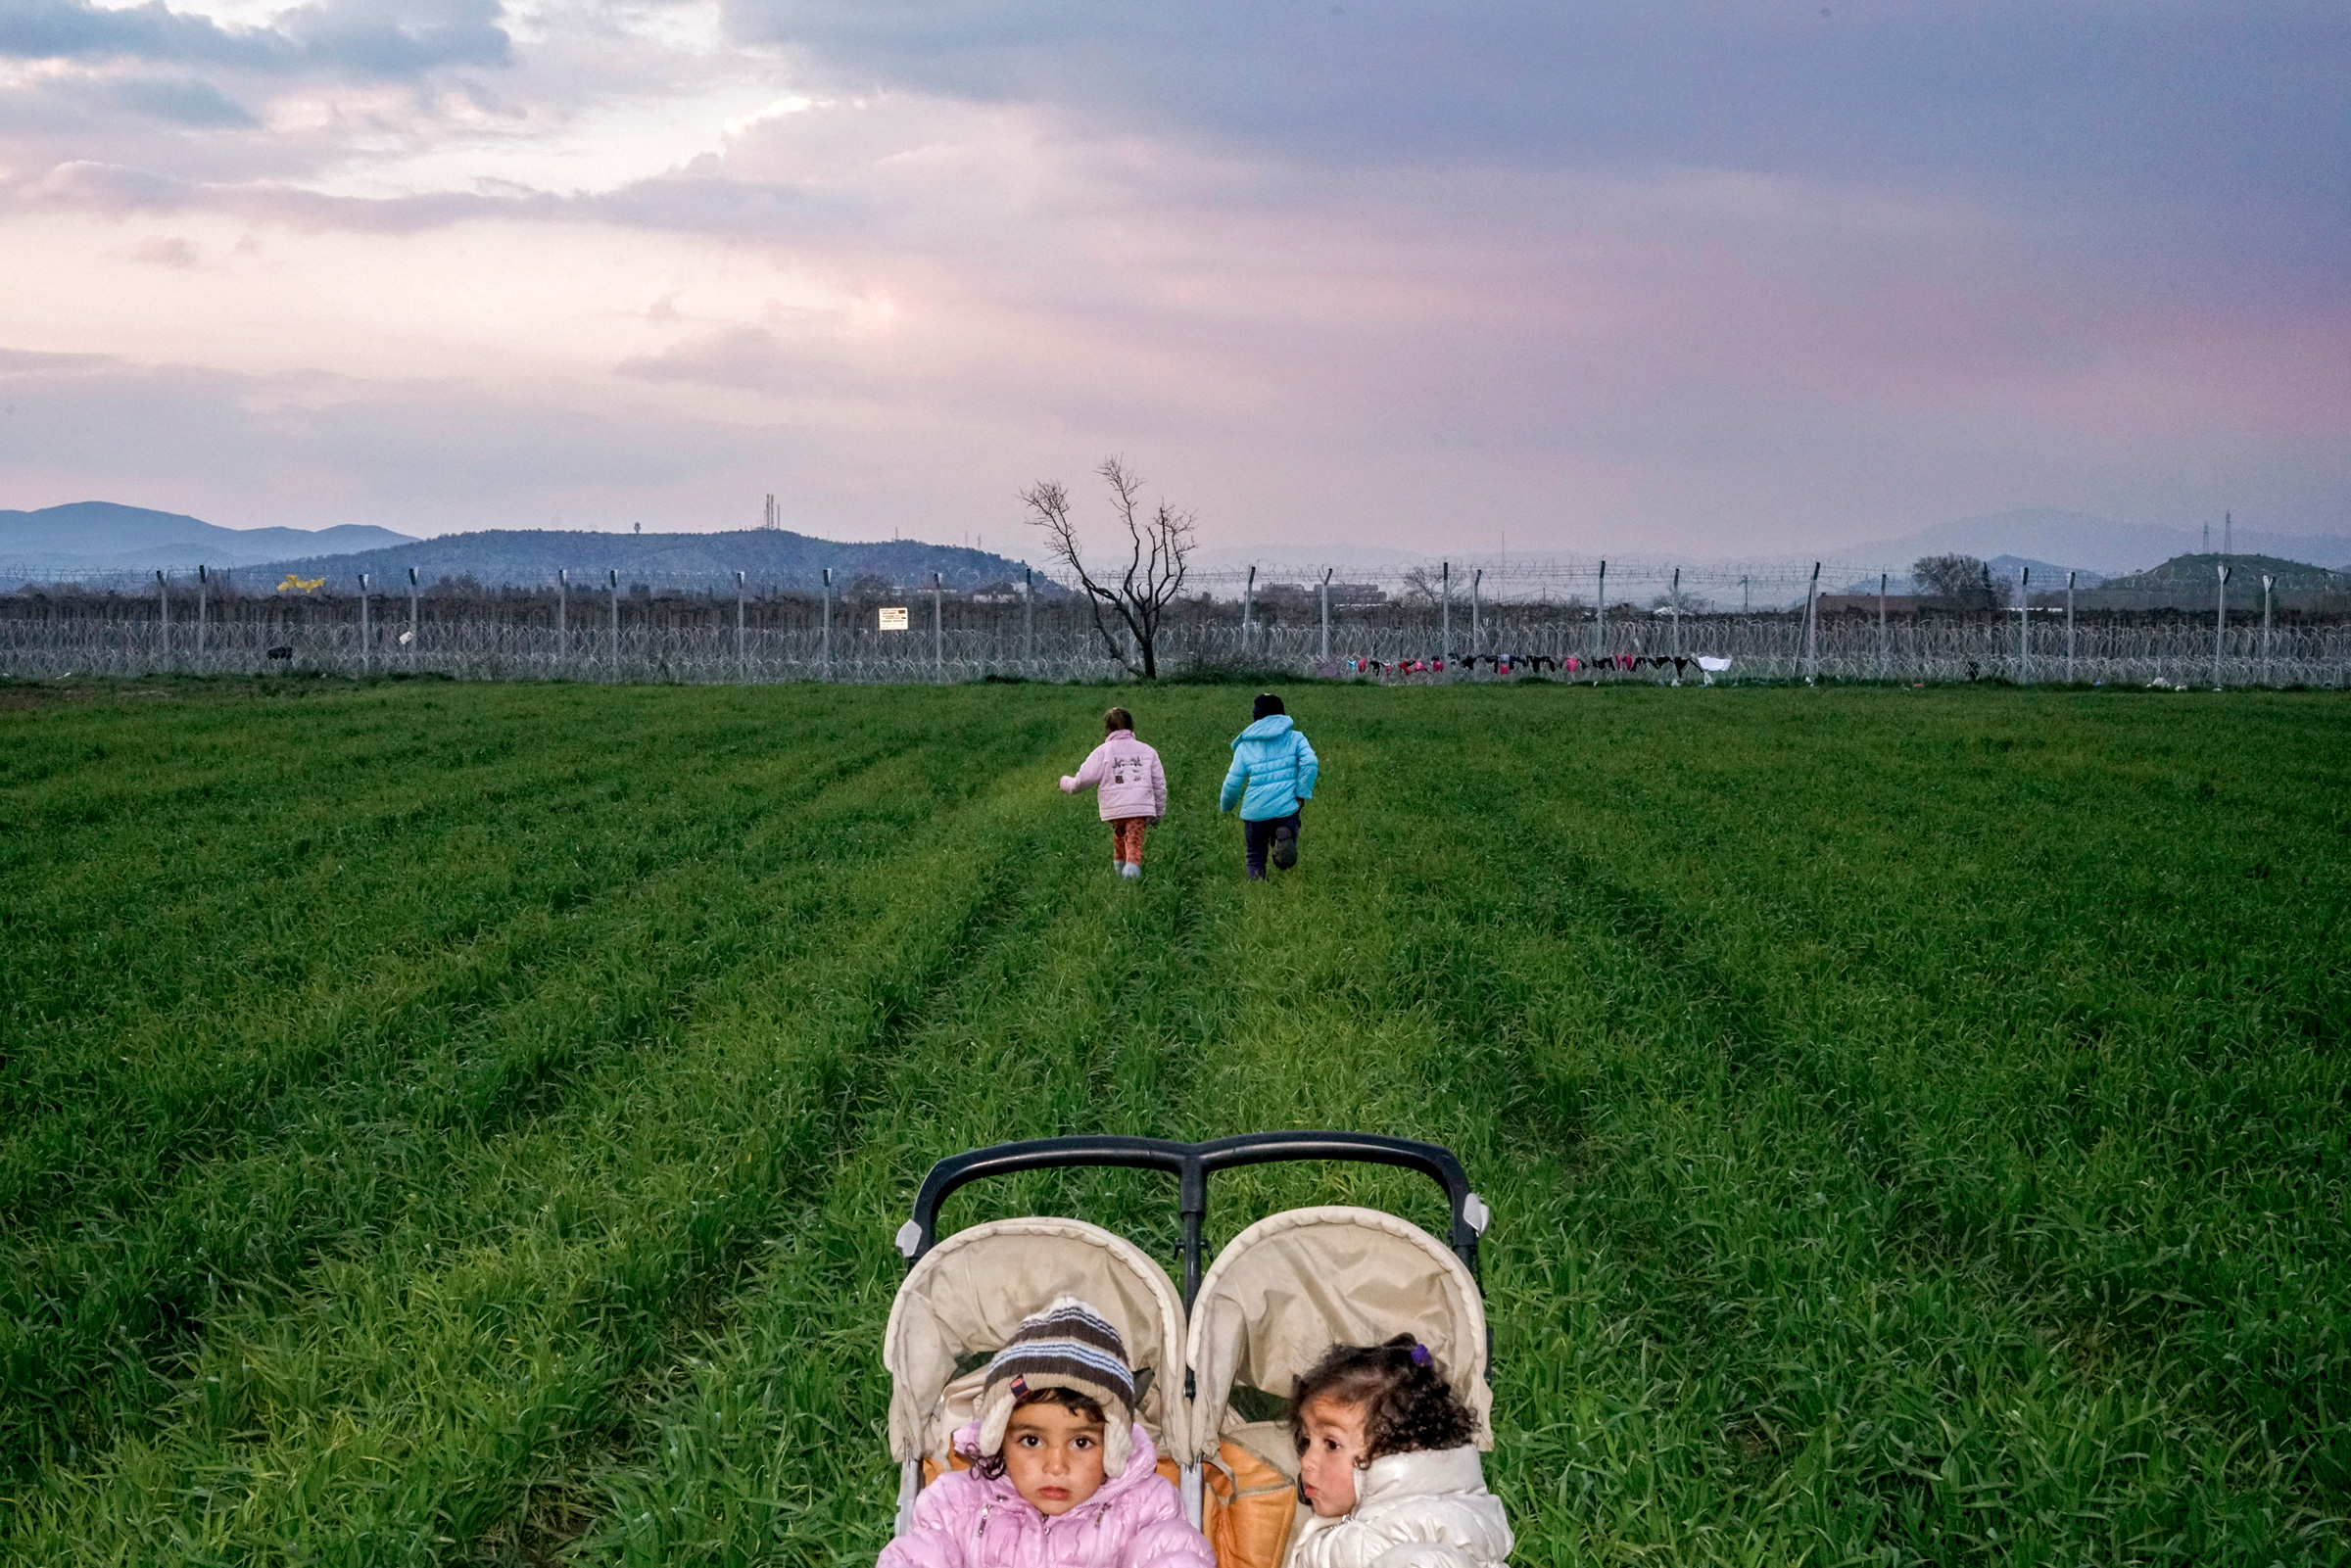 Children in the Idomeni refugee camp on the Greece-Macedonia border after Macedonia sealed its border. Idomeni. Greece, 2016. (Peter van Agtmael—Magnum Photos)